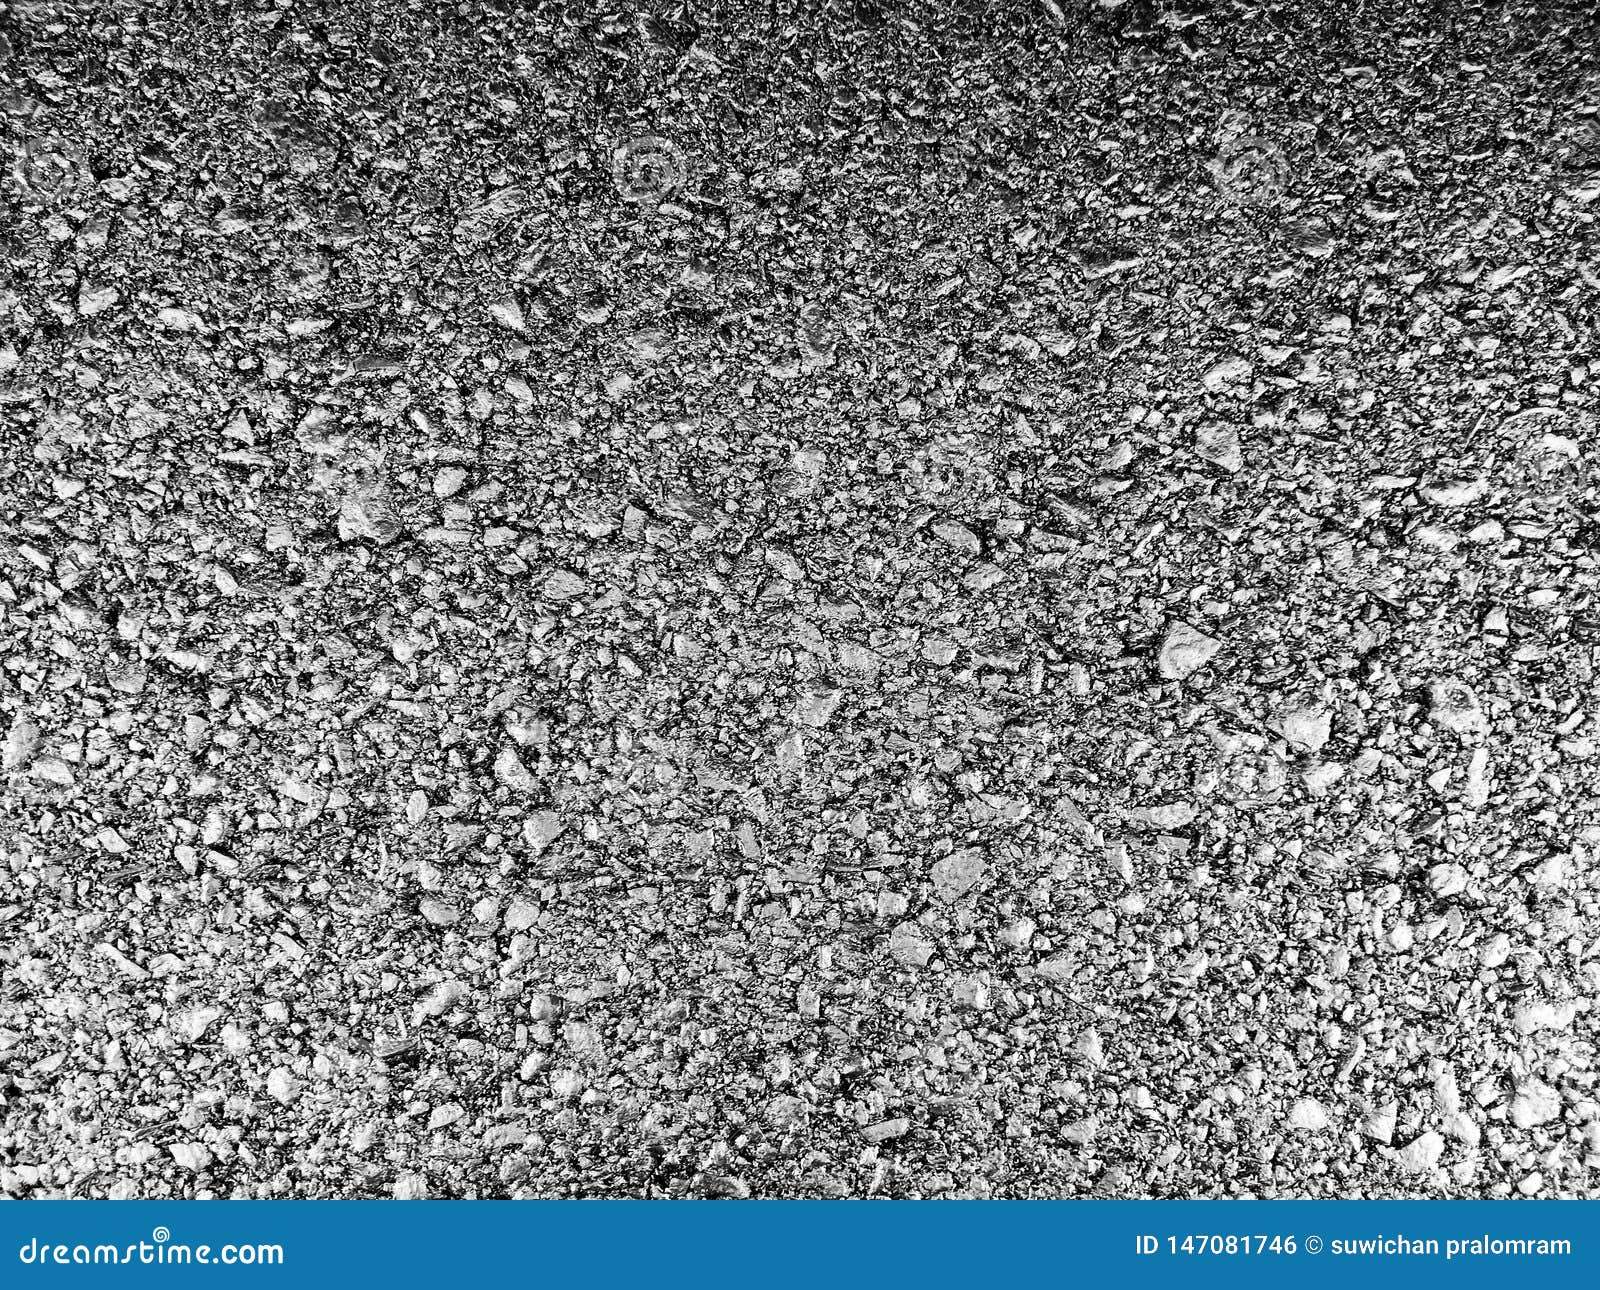 Asphalt road surface stock photo. Image of grainy, black ...